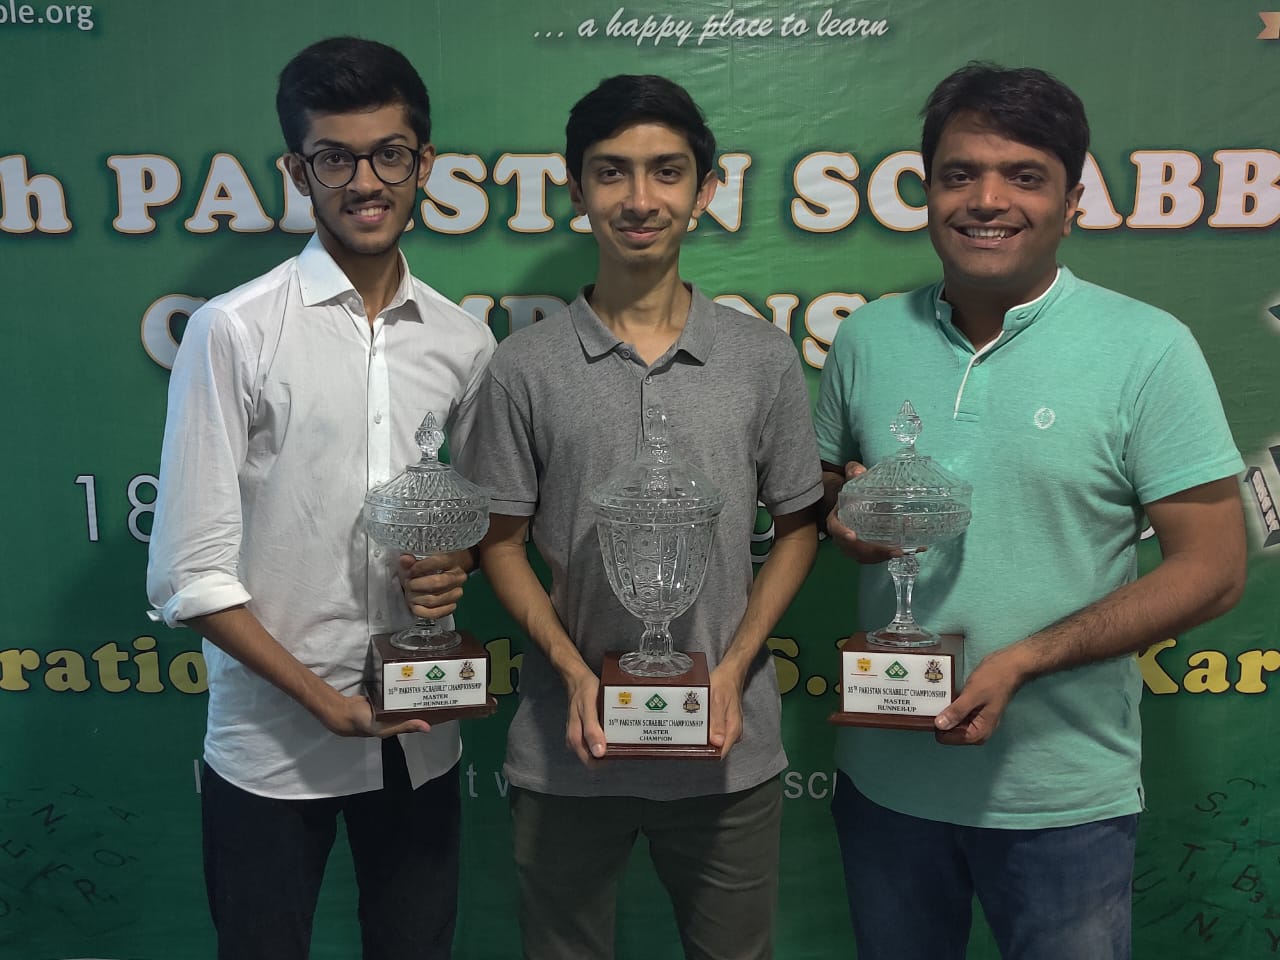 Hassan Hadi is the New Pakistan Scrabble Champion